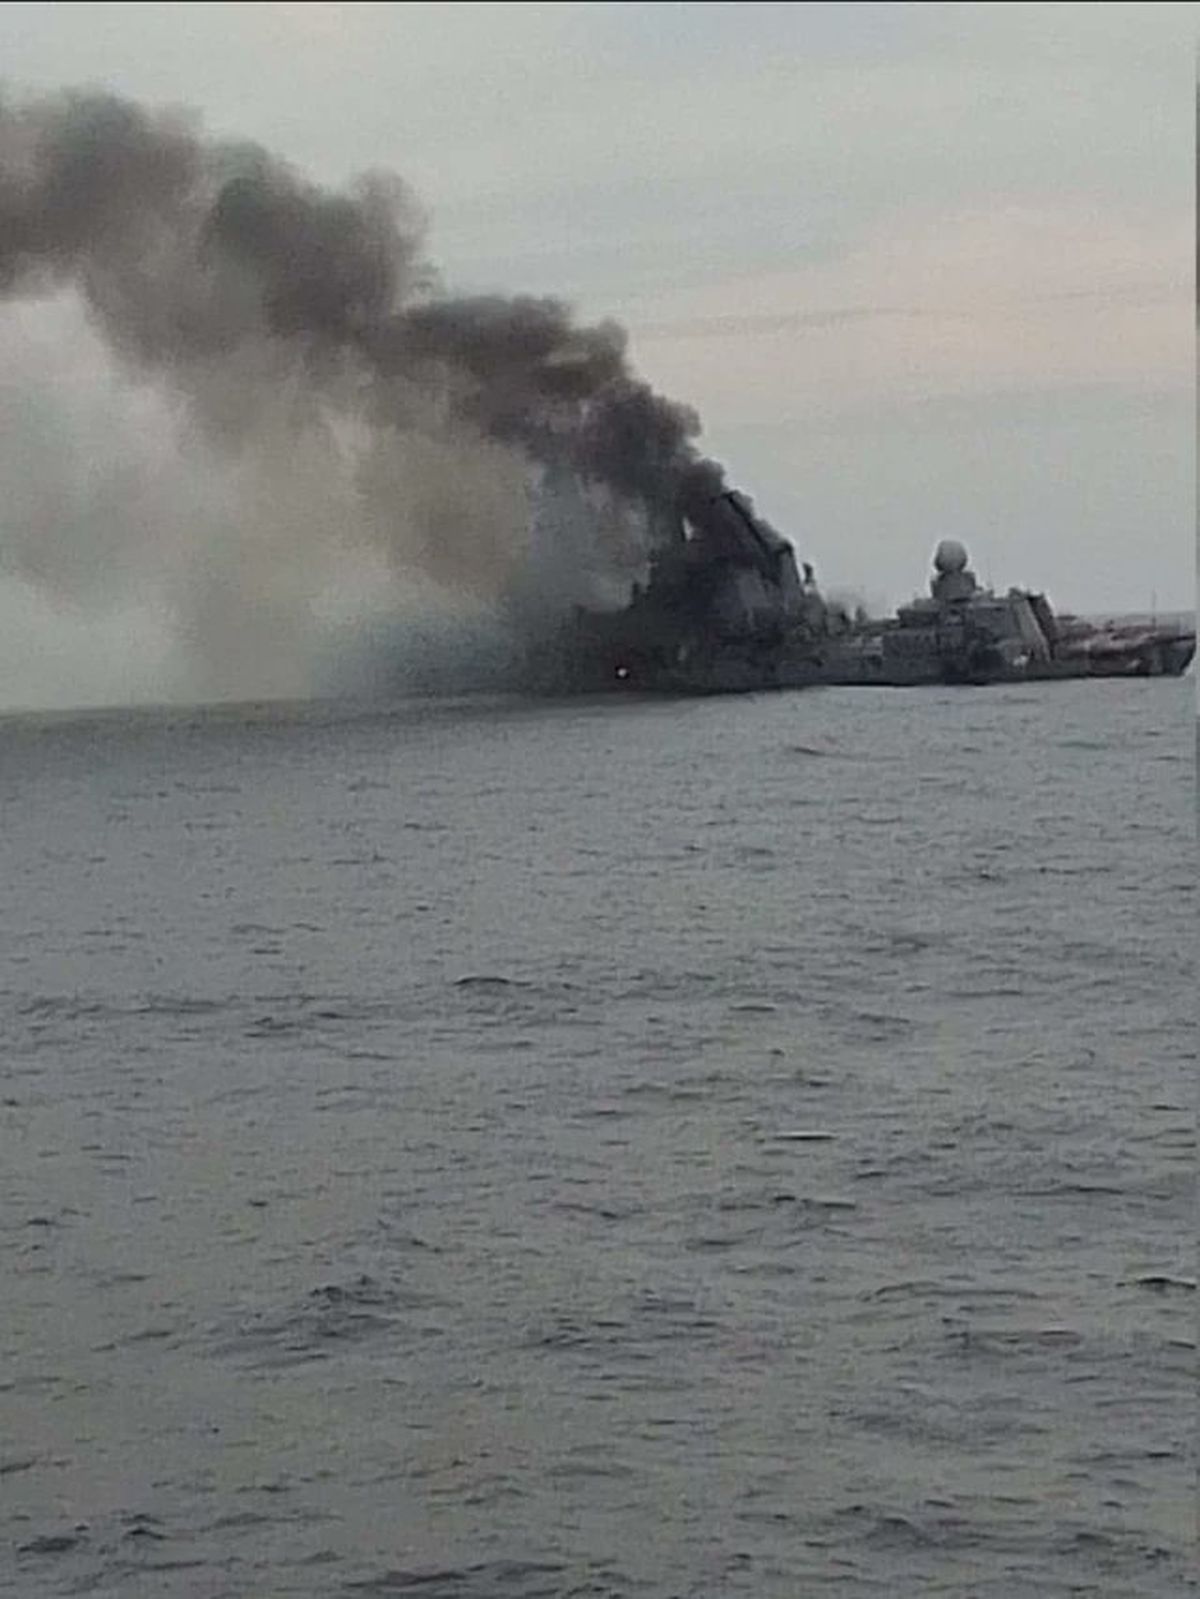 Moskva buque ruso hundido